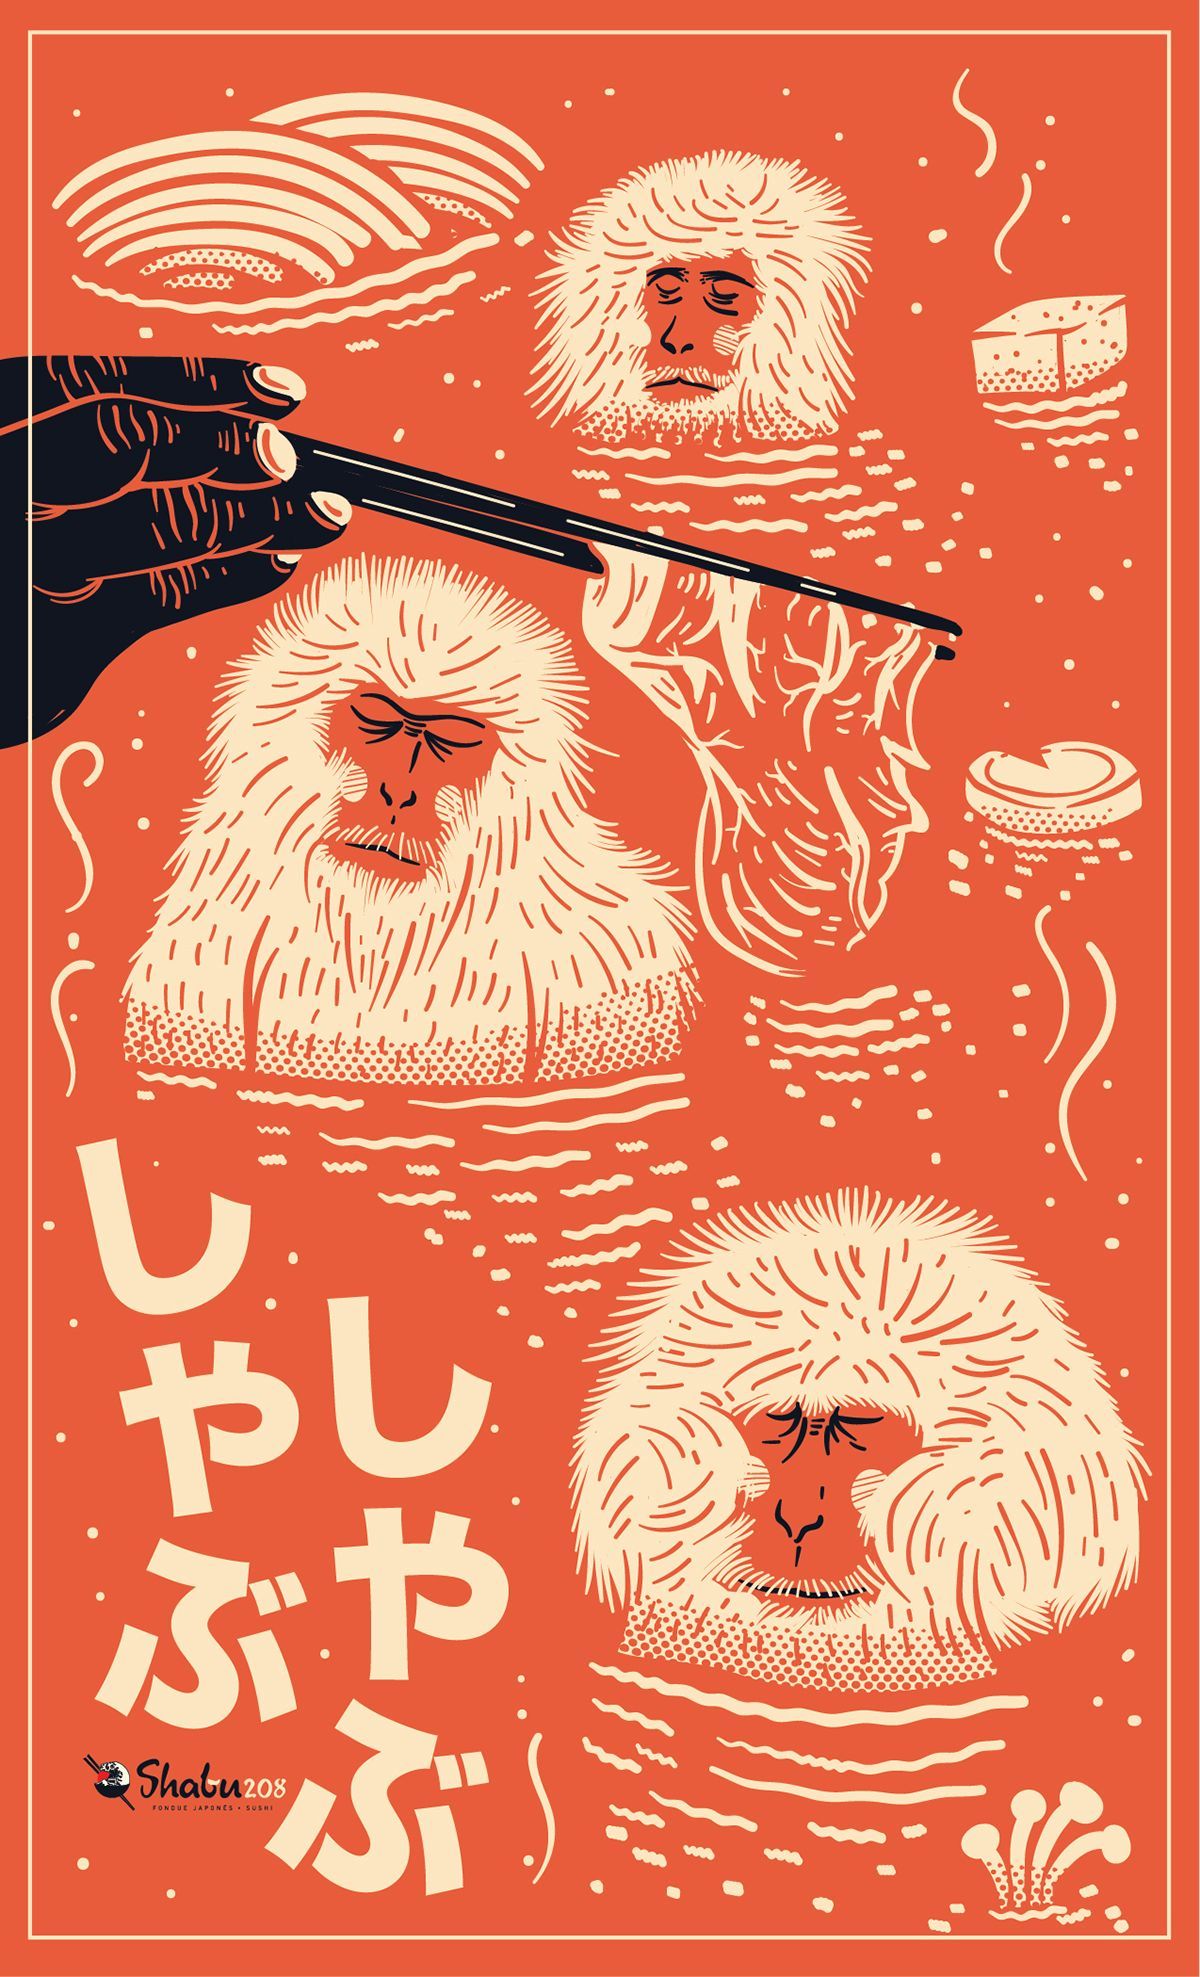 Shabu Shabu Macaques - Shabu Shabu Macaques -   18 beauty Poster illustration ideas